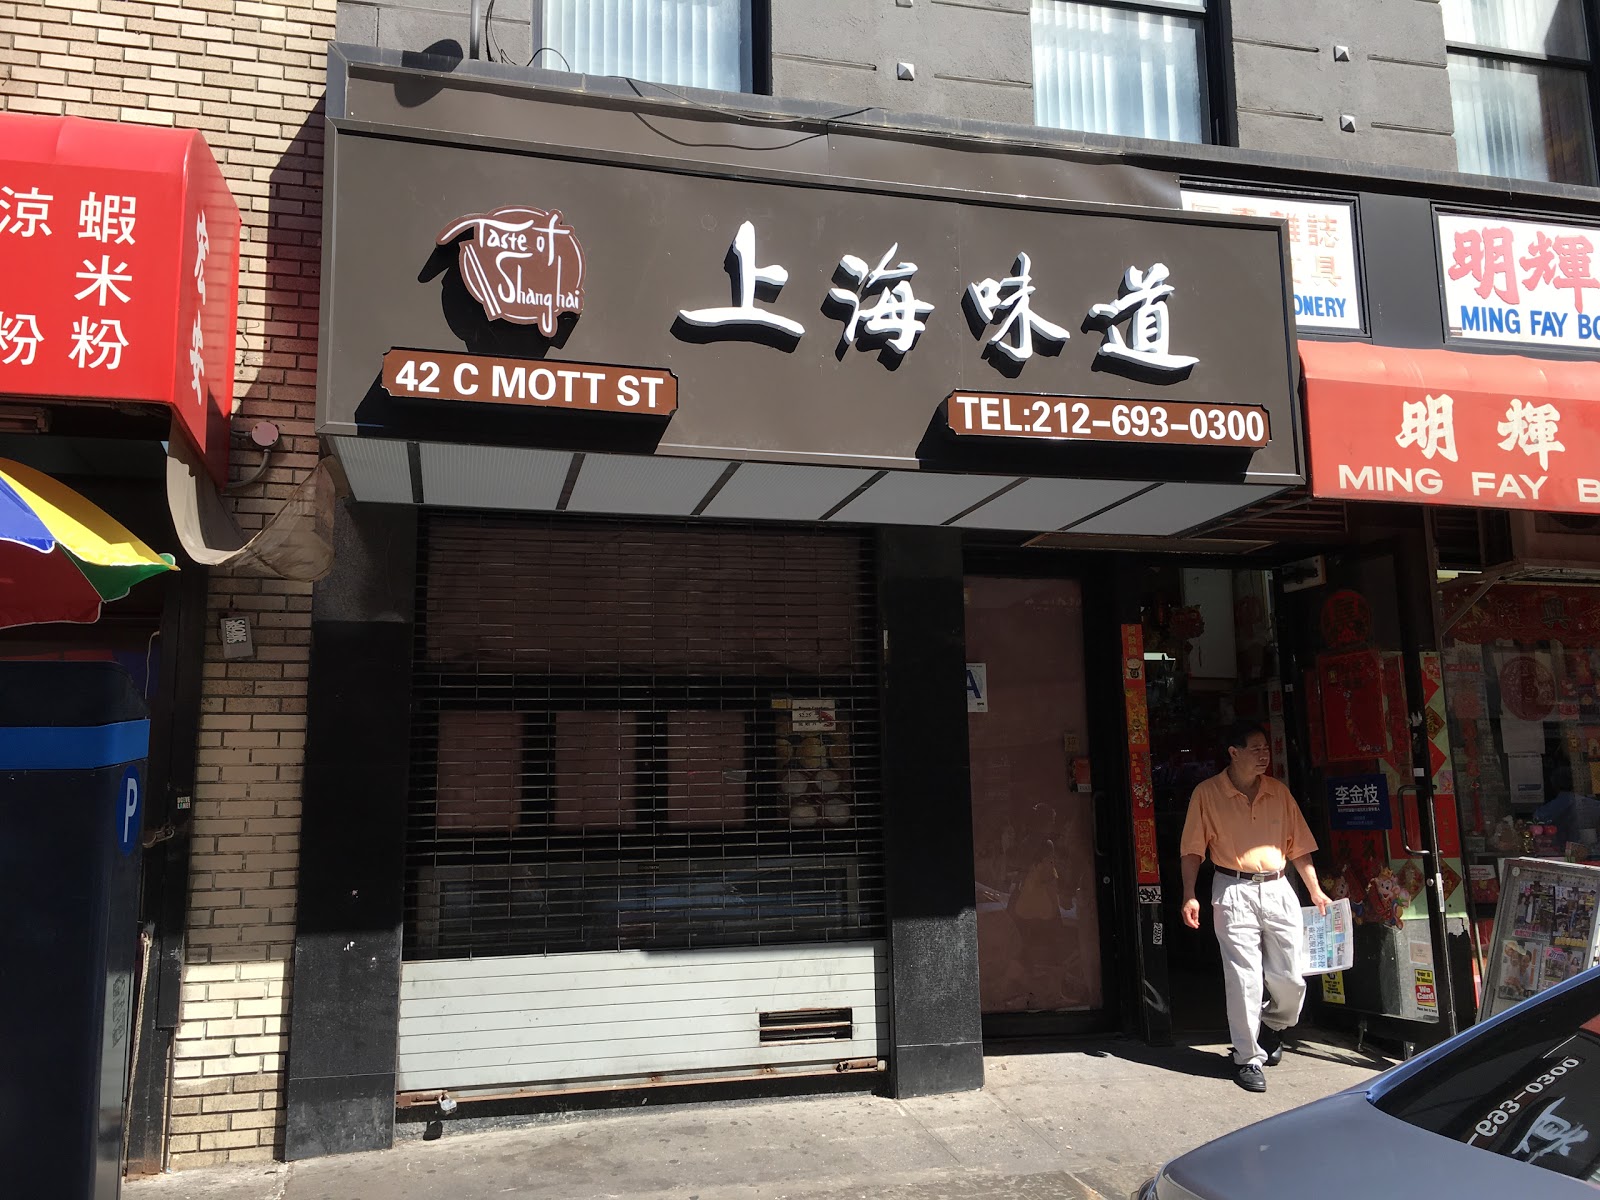 Photo of Taste of Shanghai in New York City, New York, United States - 3 Picture of Restaurant, Food, Point of interest, Establishment